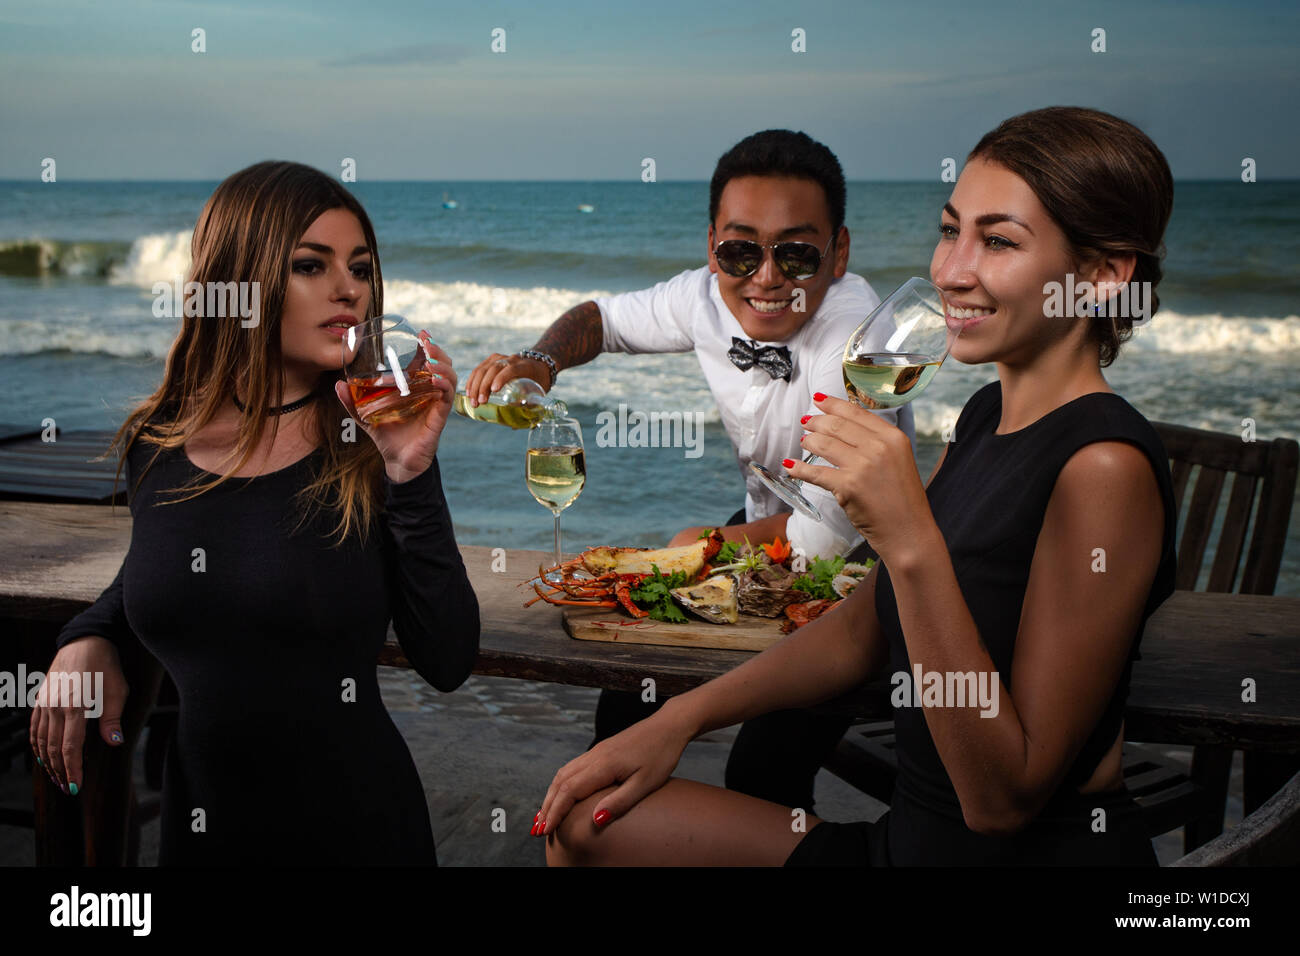 Amis dans un restaurant de fruits de mer - cheers avec verres à vin Banque D'Images